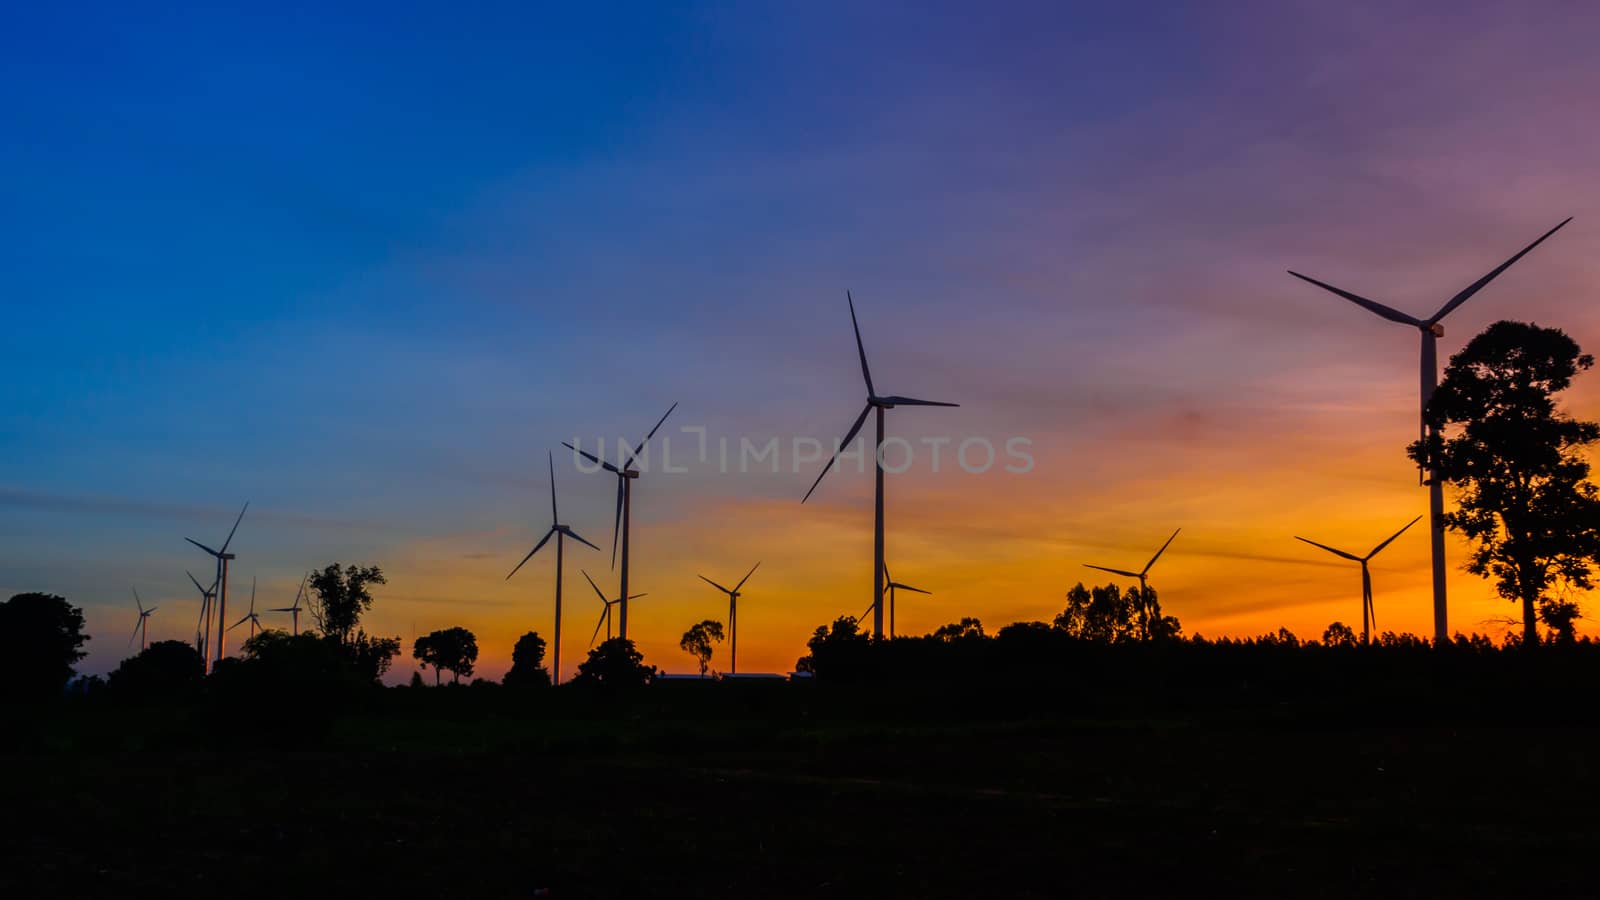 Wind turbines during beautiful sunset,silhouette